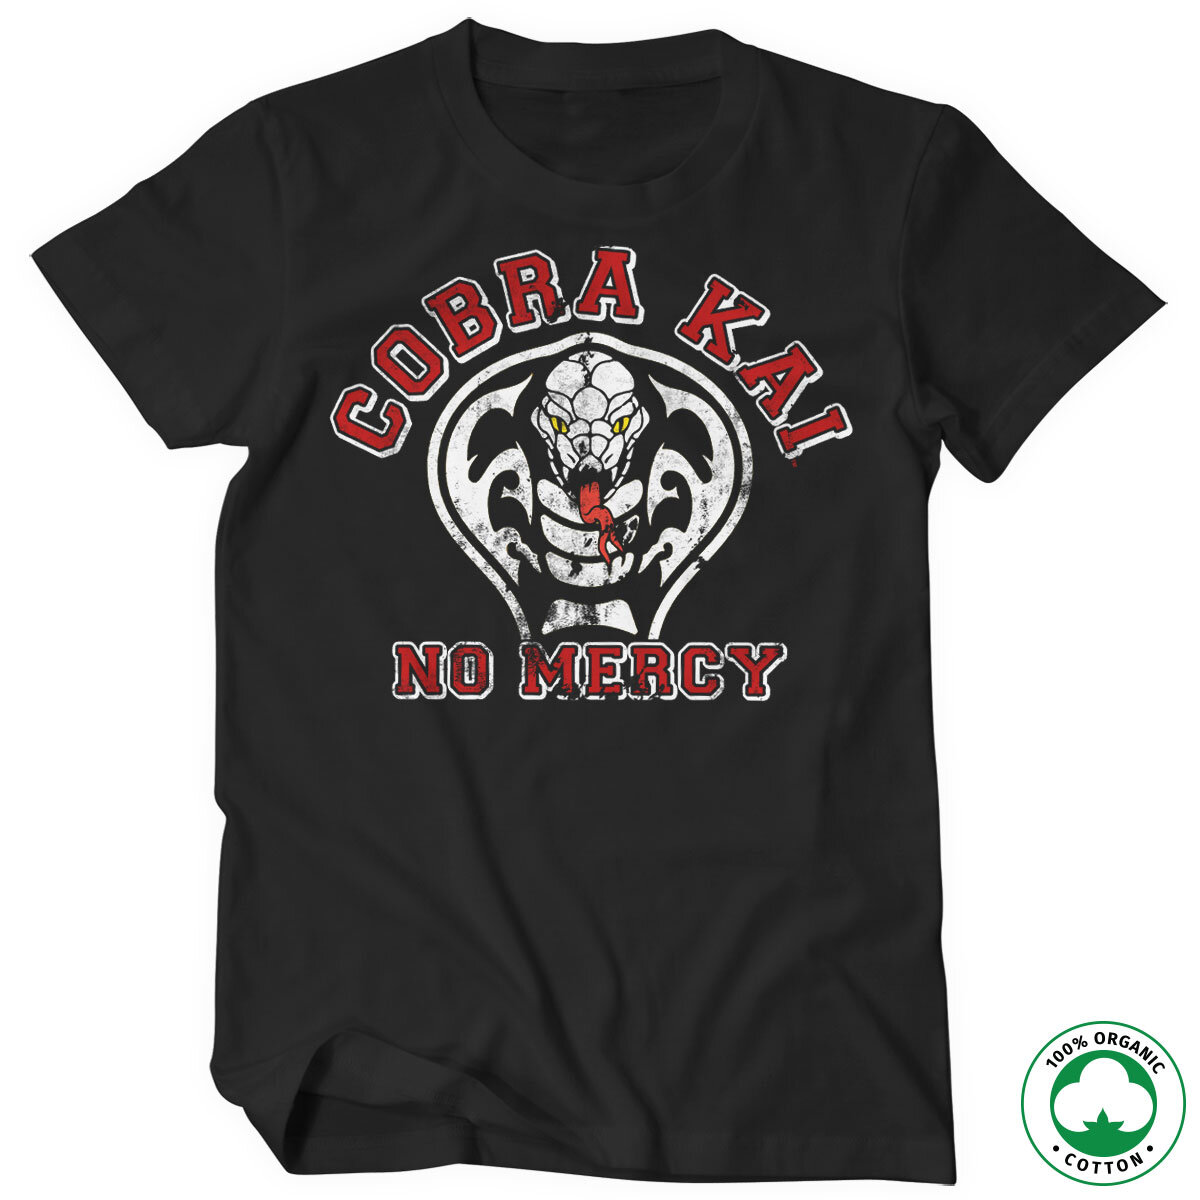 Cobra Kai - No Mercy Organic T-Shirt